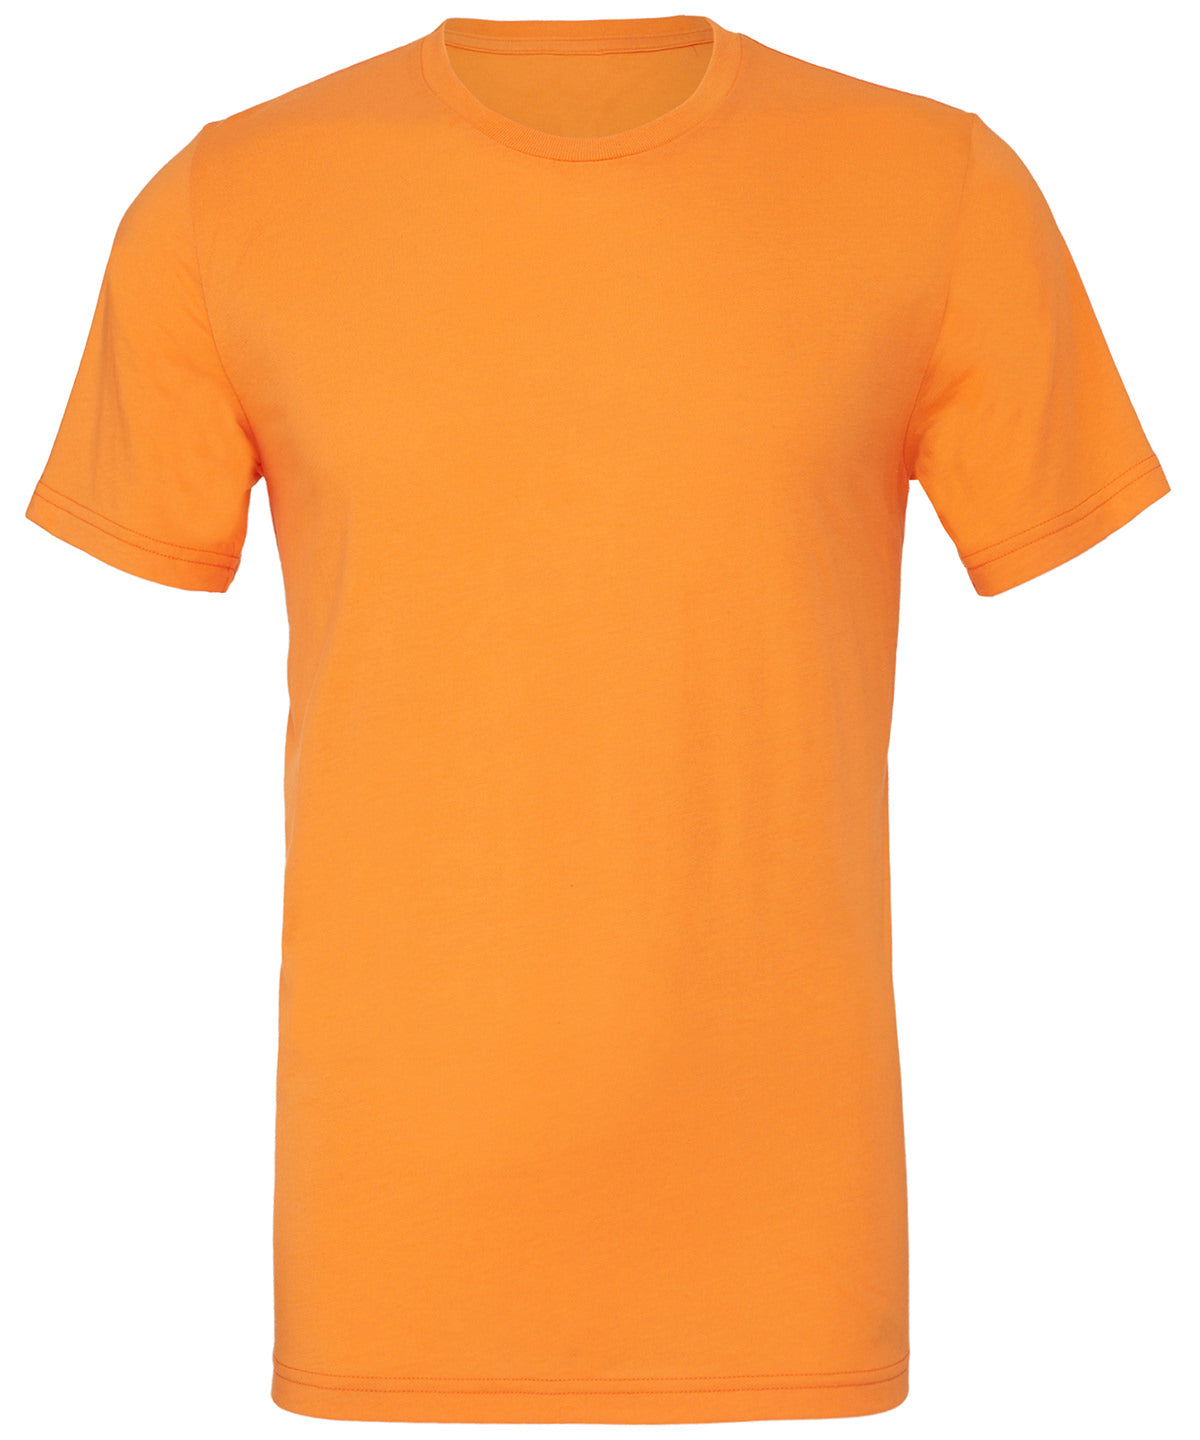 Stuttermabolir - Unisex Polycotton Short Sleeve T-shirt